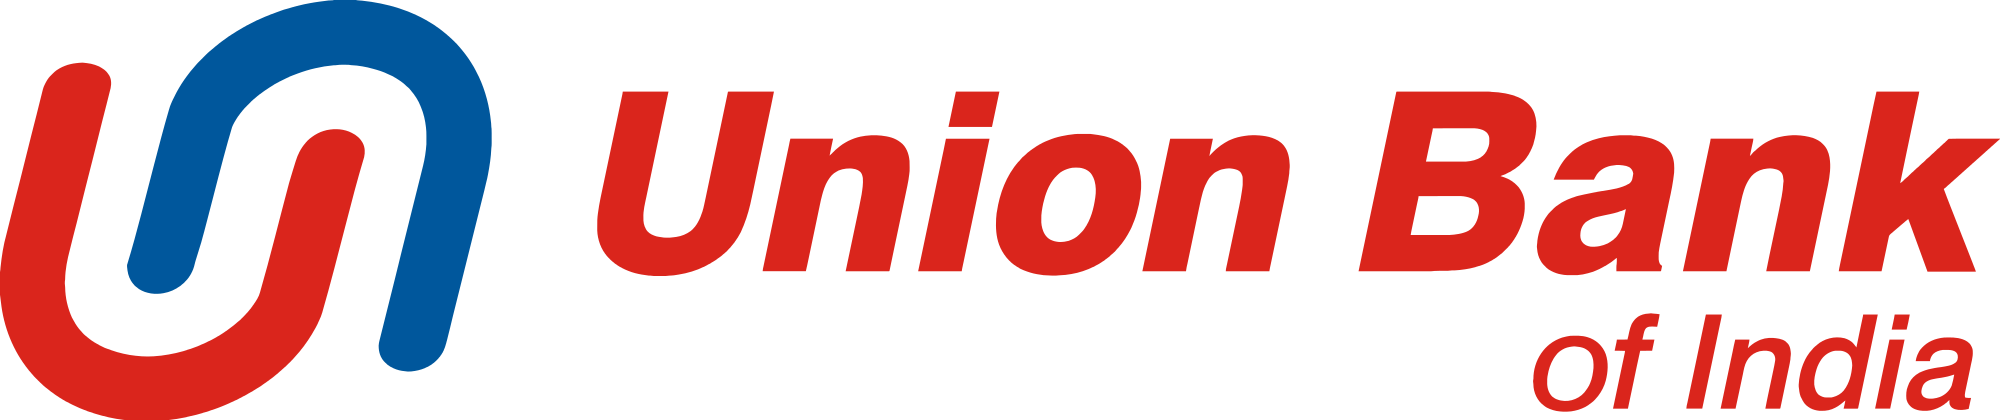 Union Bank of India Brand Logo